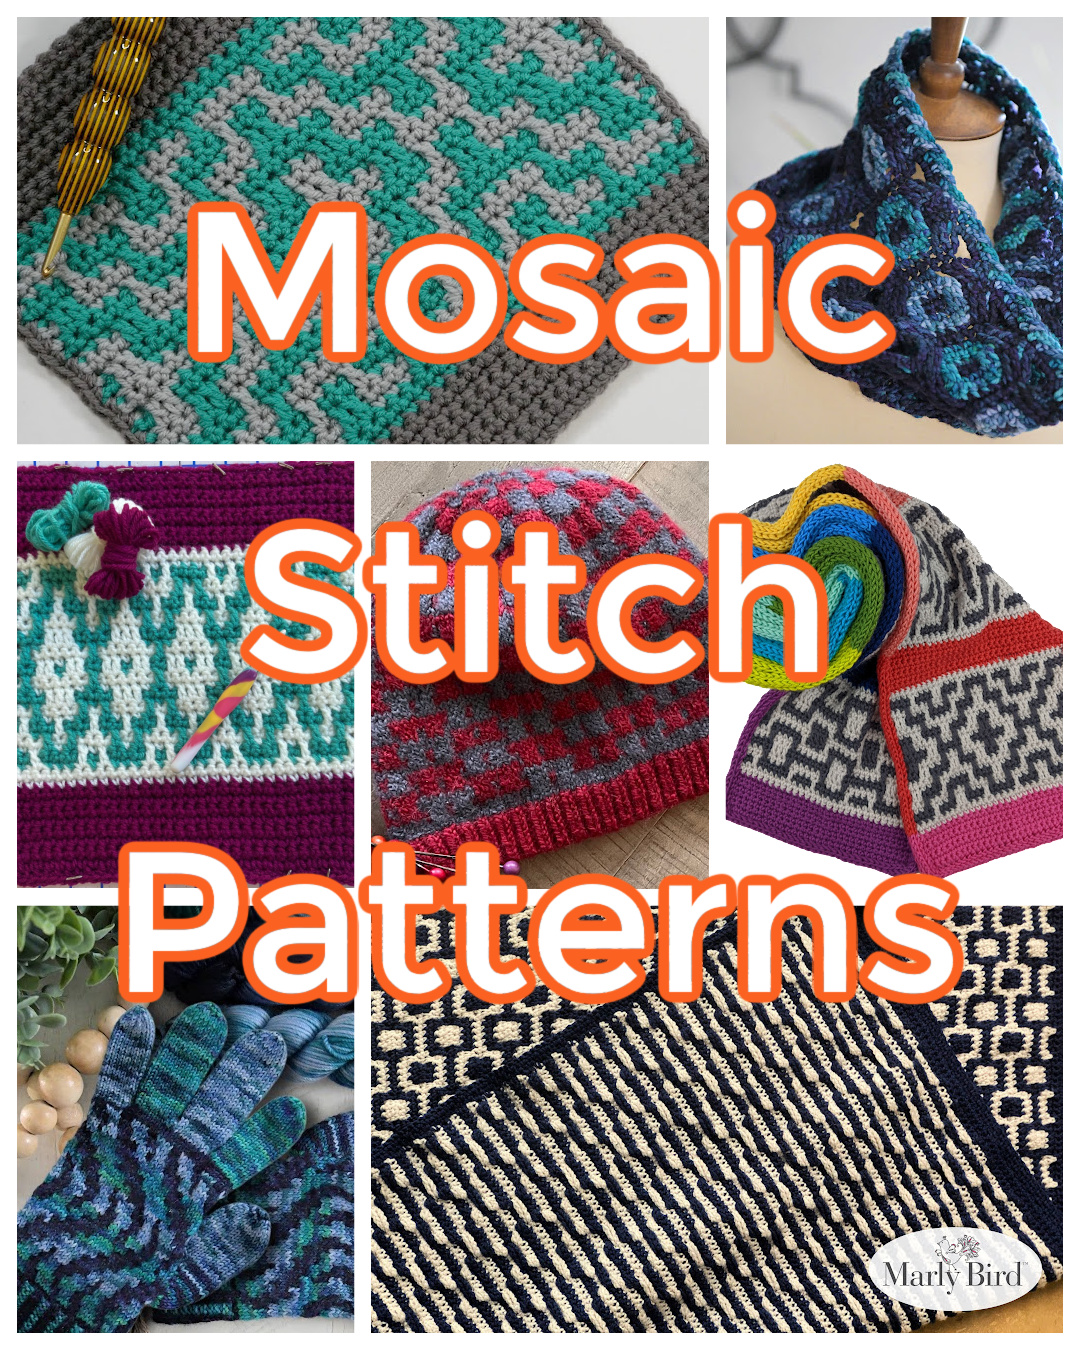 Mosaic Knitting and Mosaic Crochet Resources